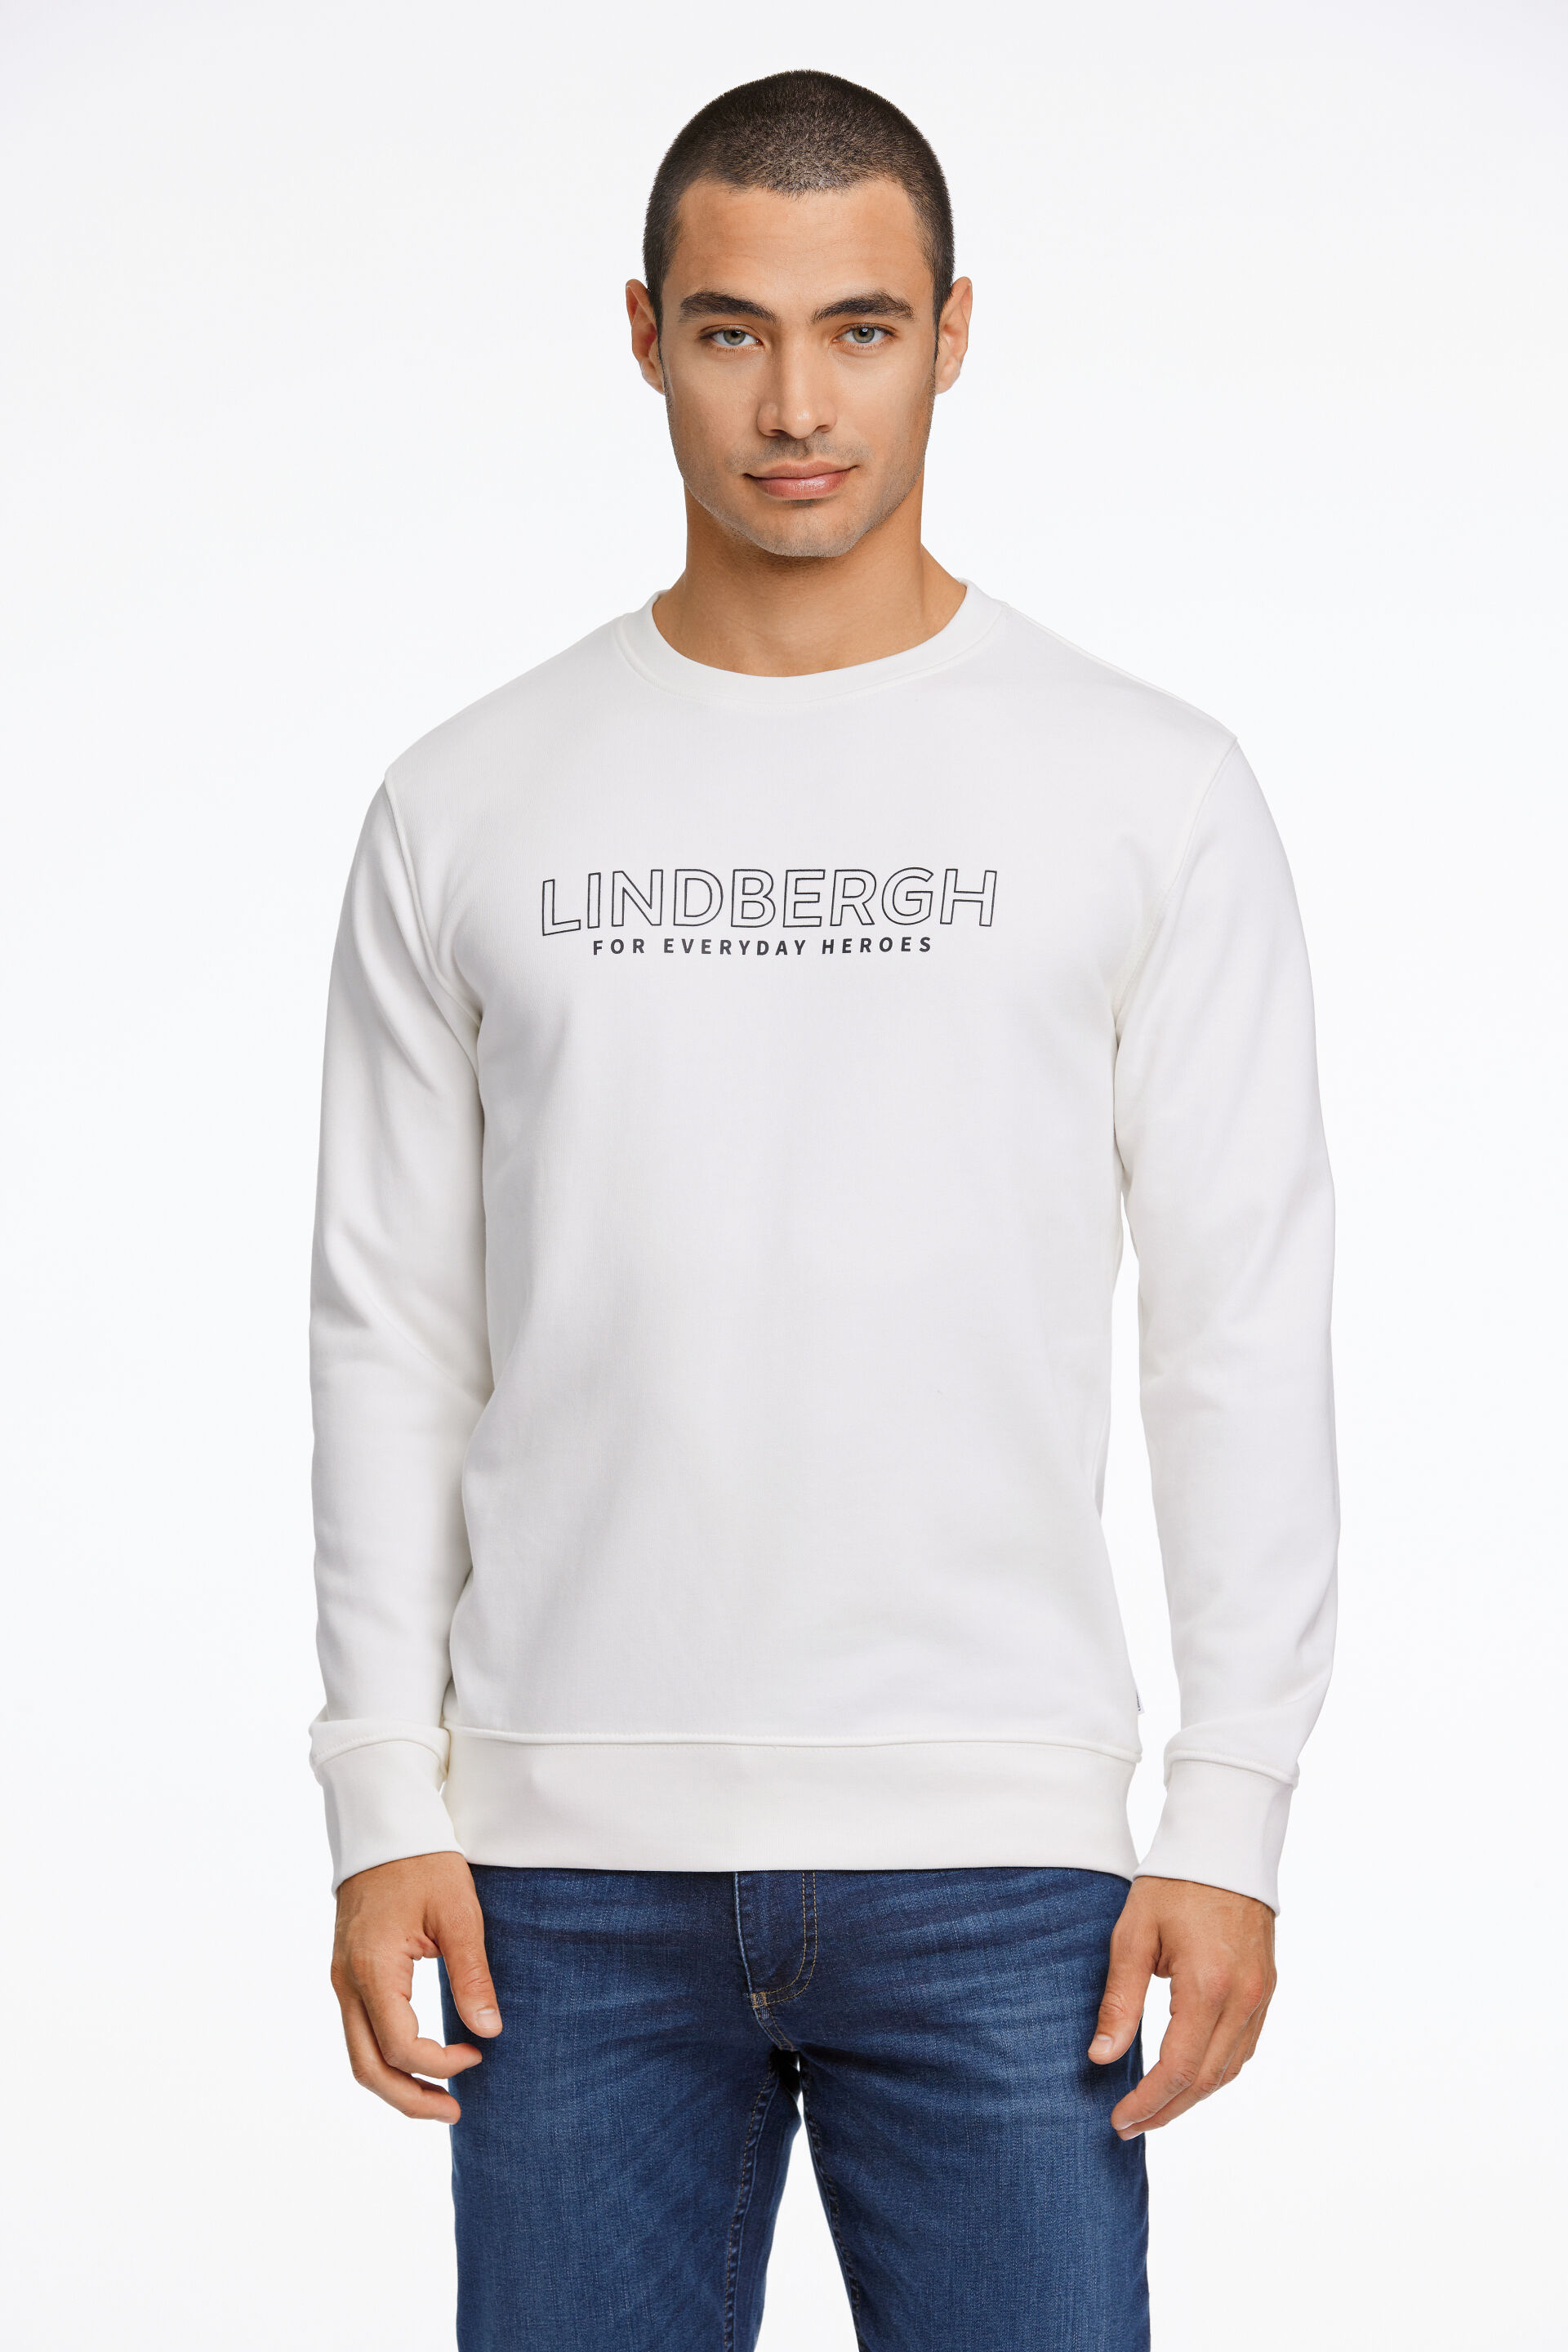 Lindbergh  Sweatshirt Vit 30-705127